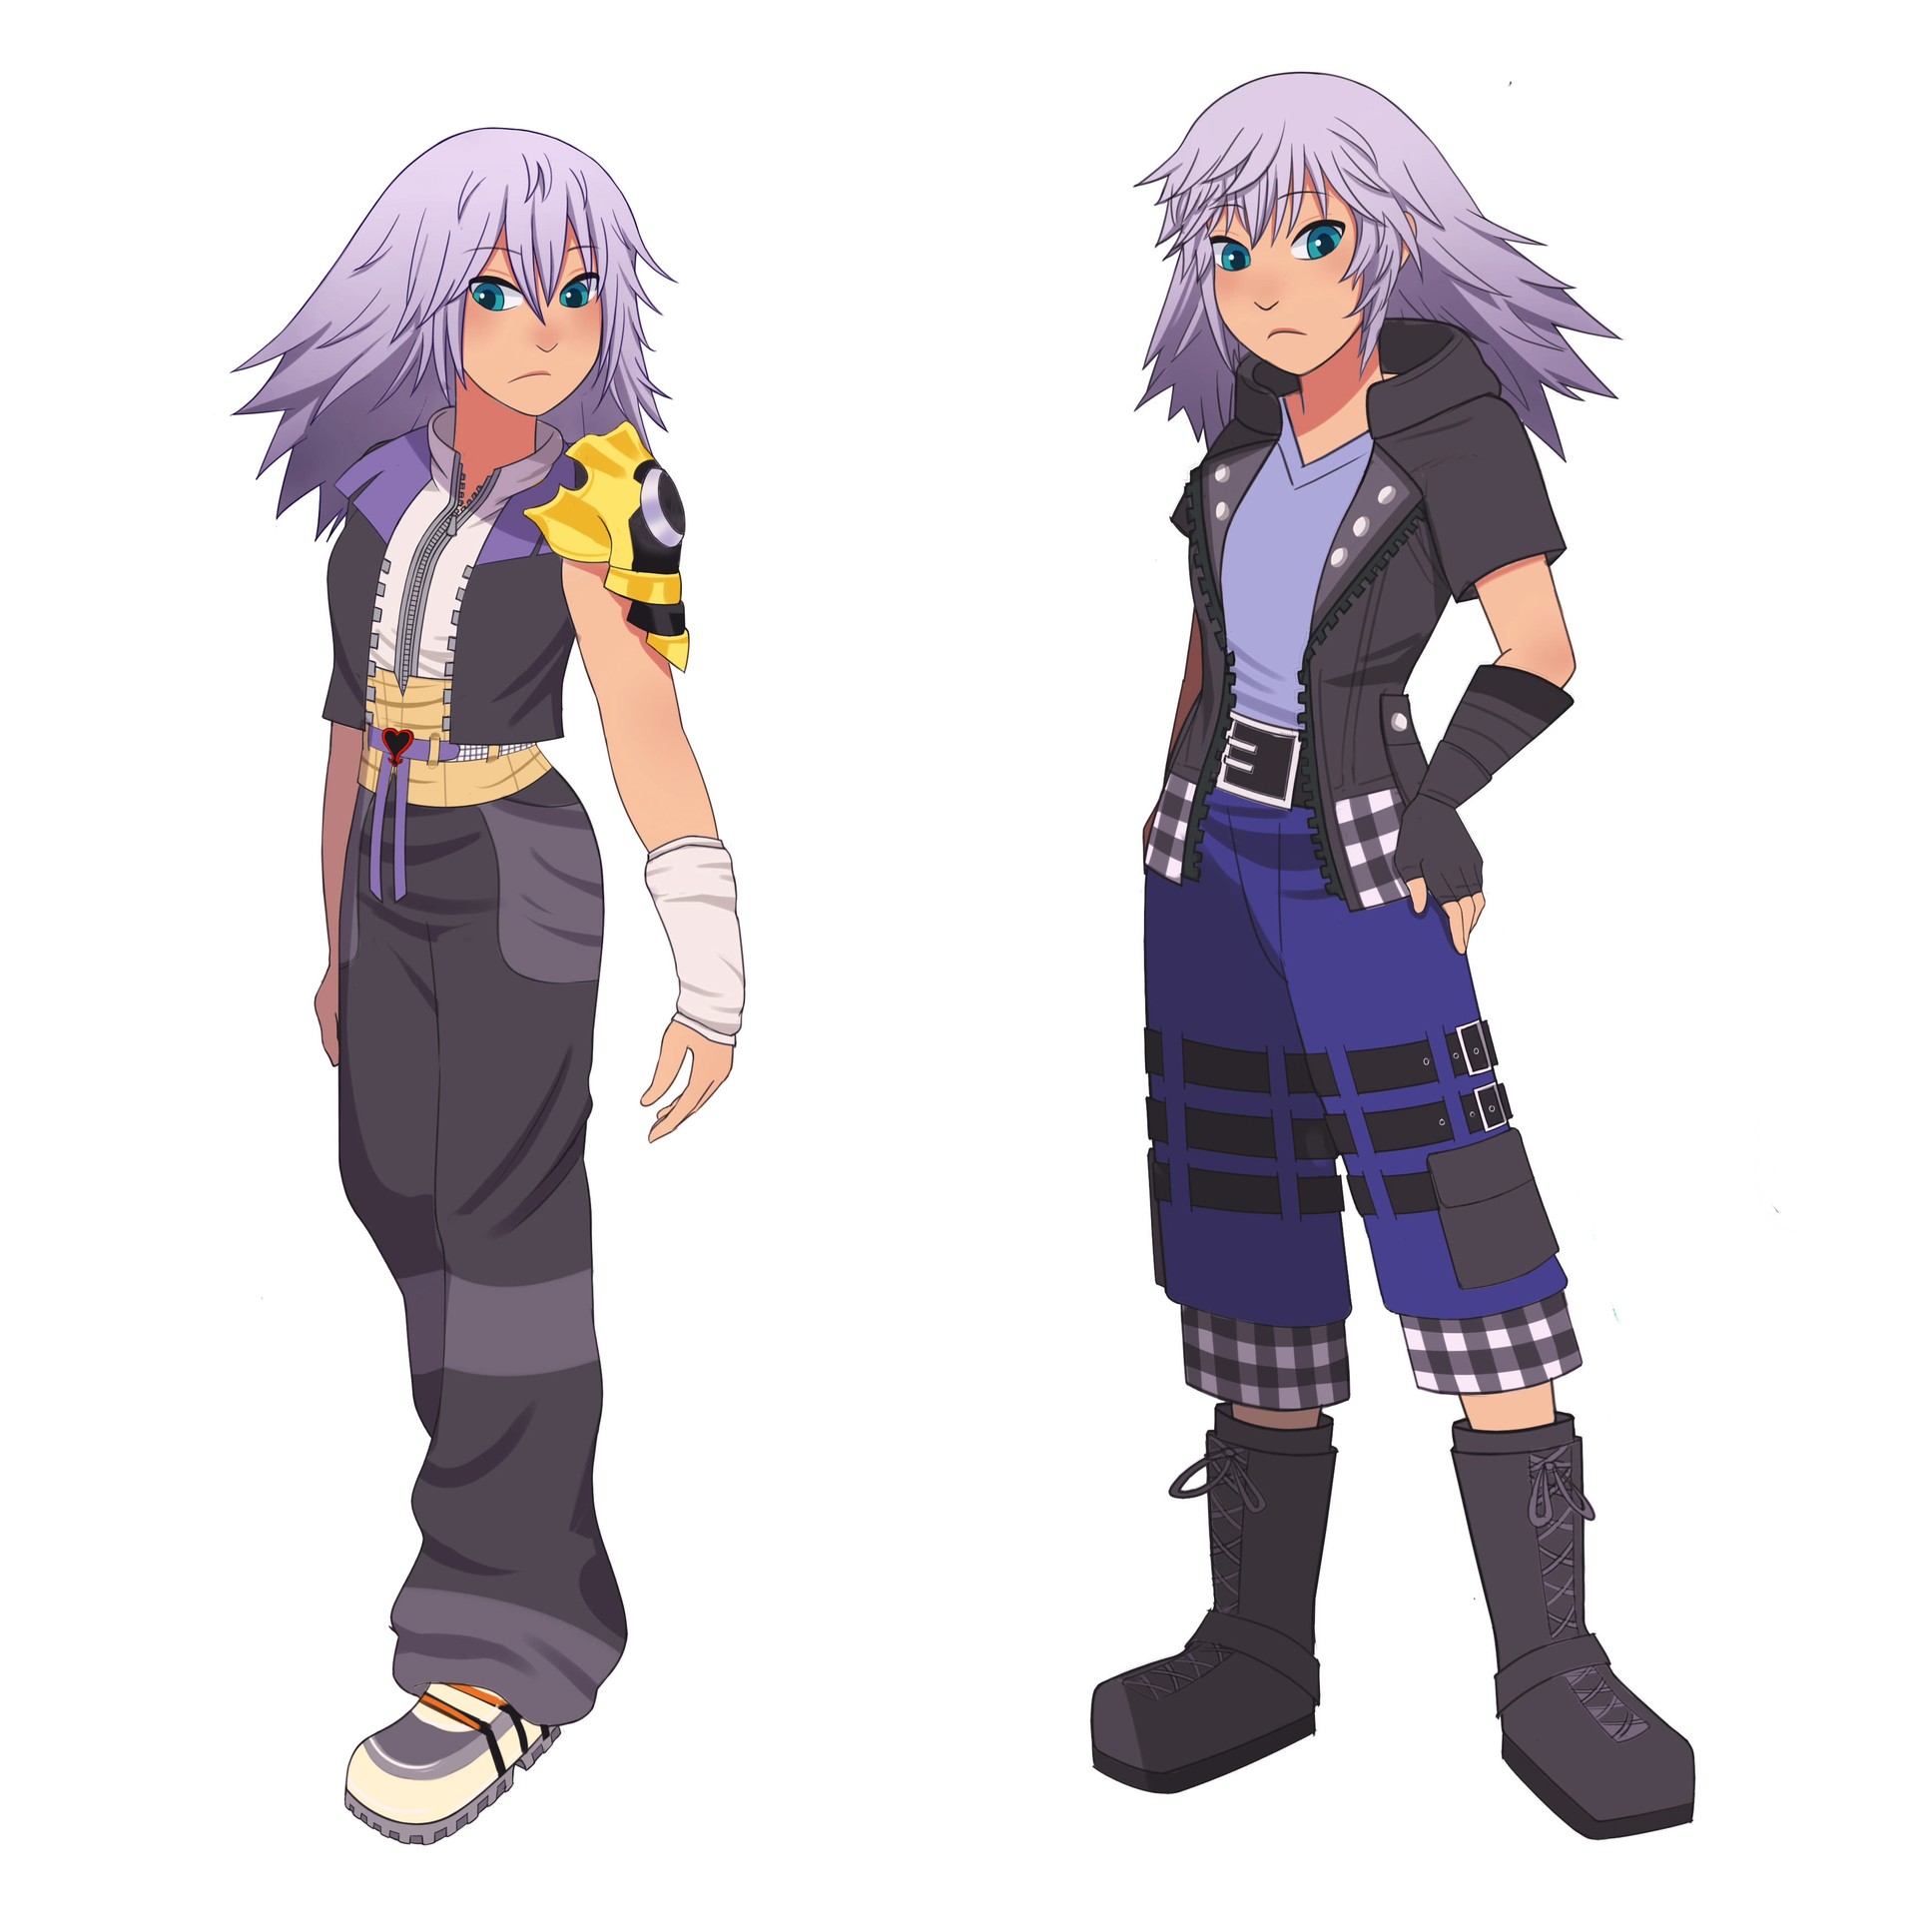 ArtStation - Kingdom Hearts Style Avatar Commissions (Update)